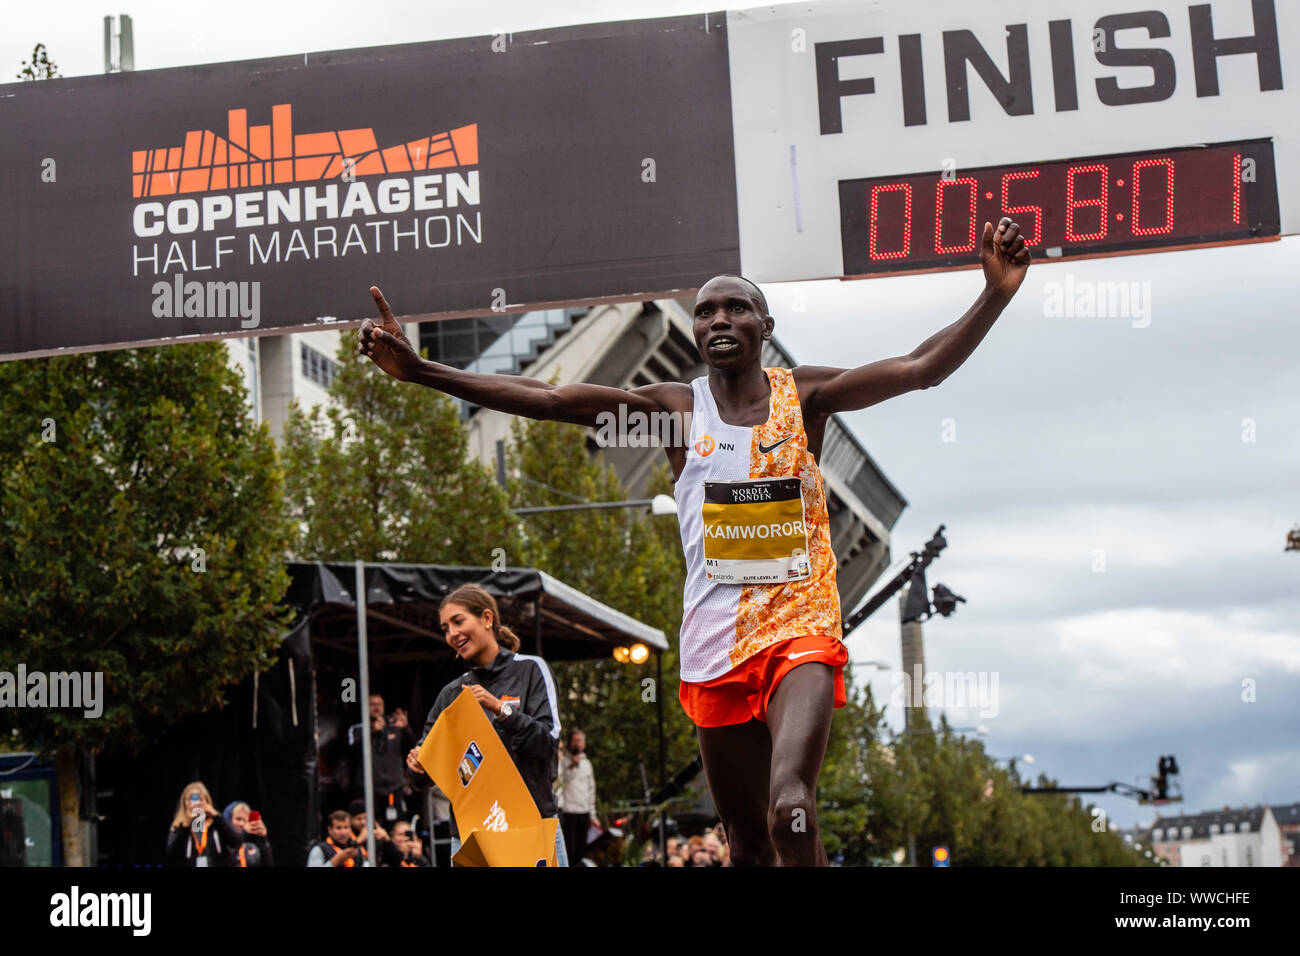 Geoffrey Kamworor smashes the Half Marathon World Record as he crosses the finishing line during the 2019 Copenhagen Half Marathon in Denmark. Stock Photo